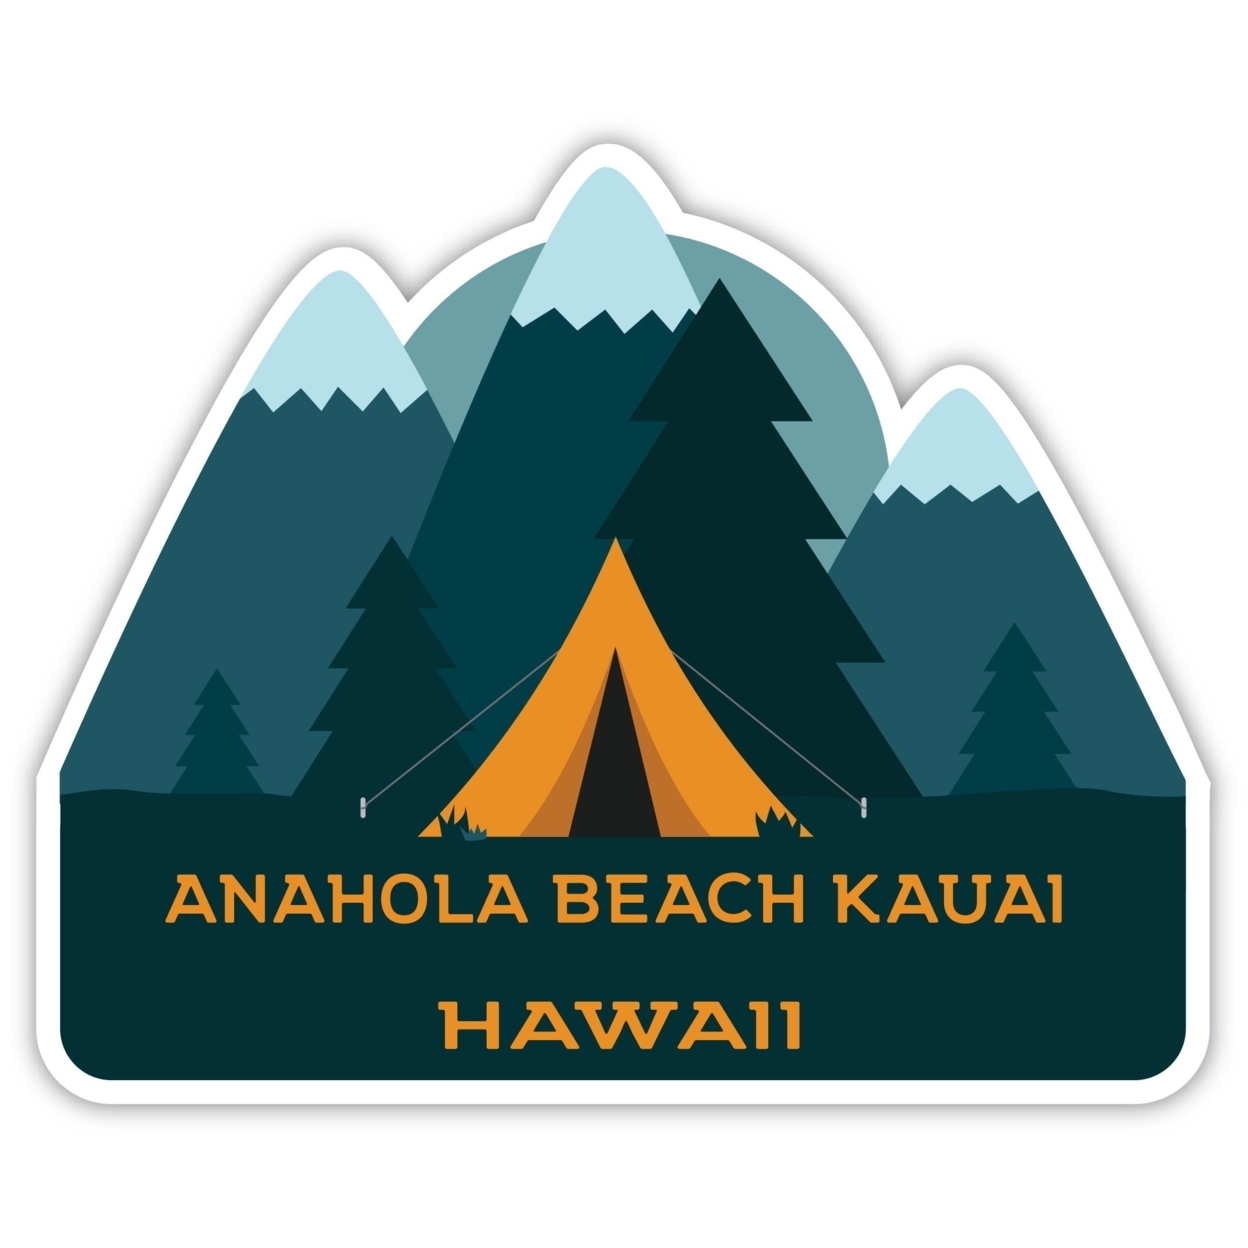 Anahola Beach Kauai Hawaii Souvenir Decorative Stickers (Choose Theme And Size) - 4-Pack, 8-Inch, Tent